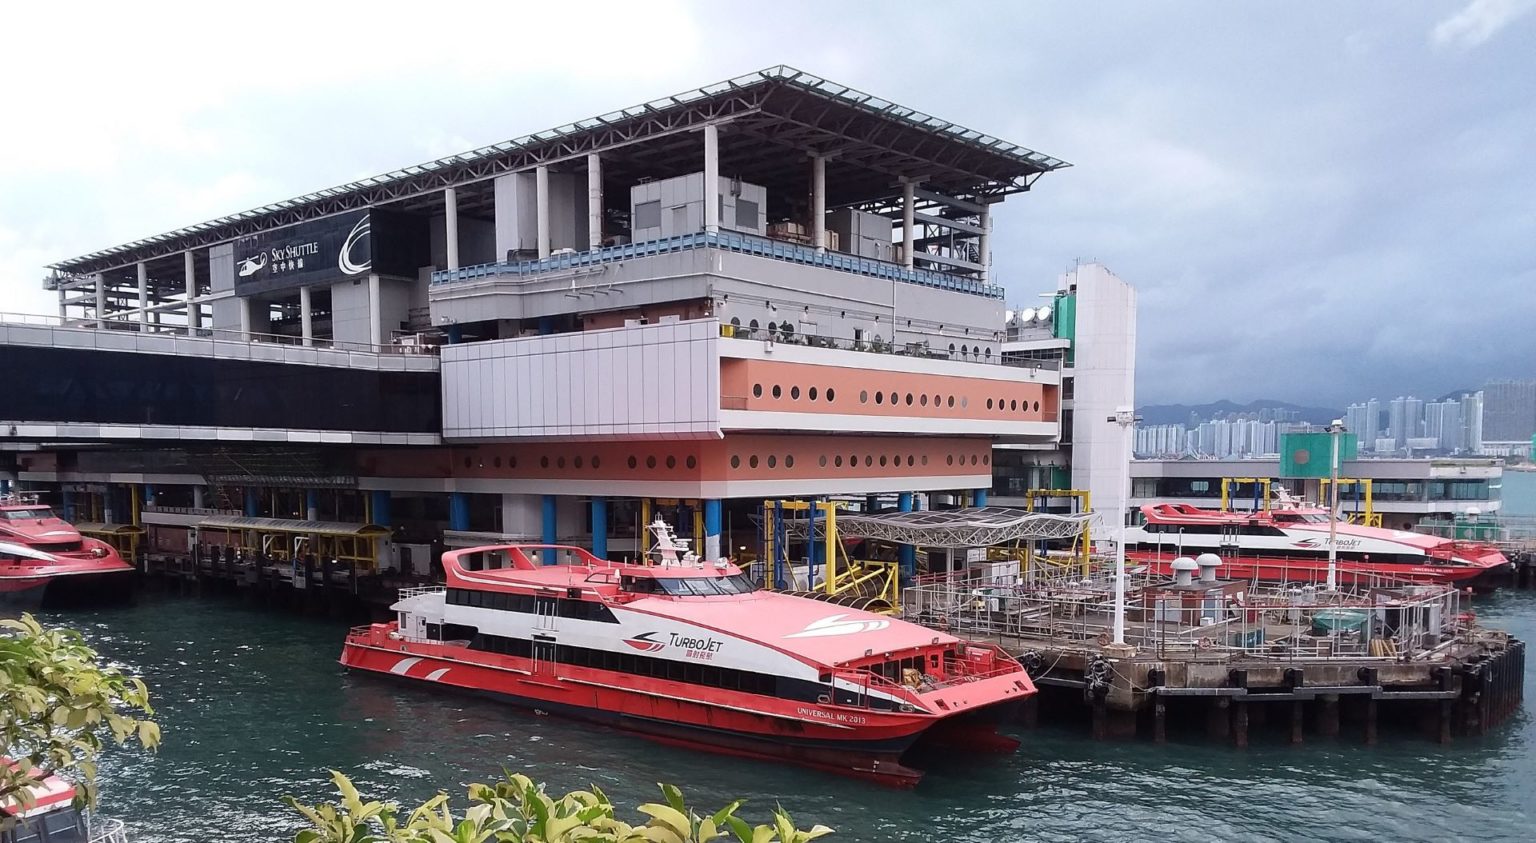 The Hong Kong-Macau ferry pier at Sheung Wan.